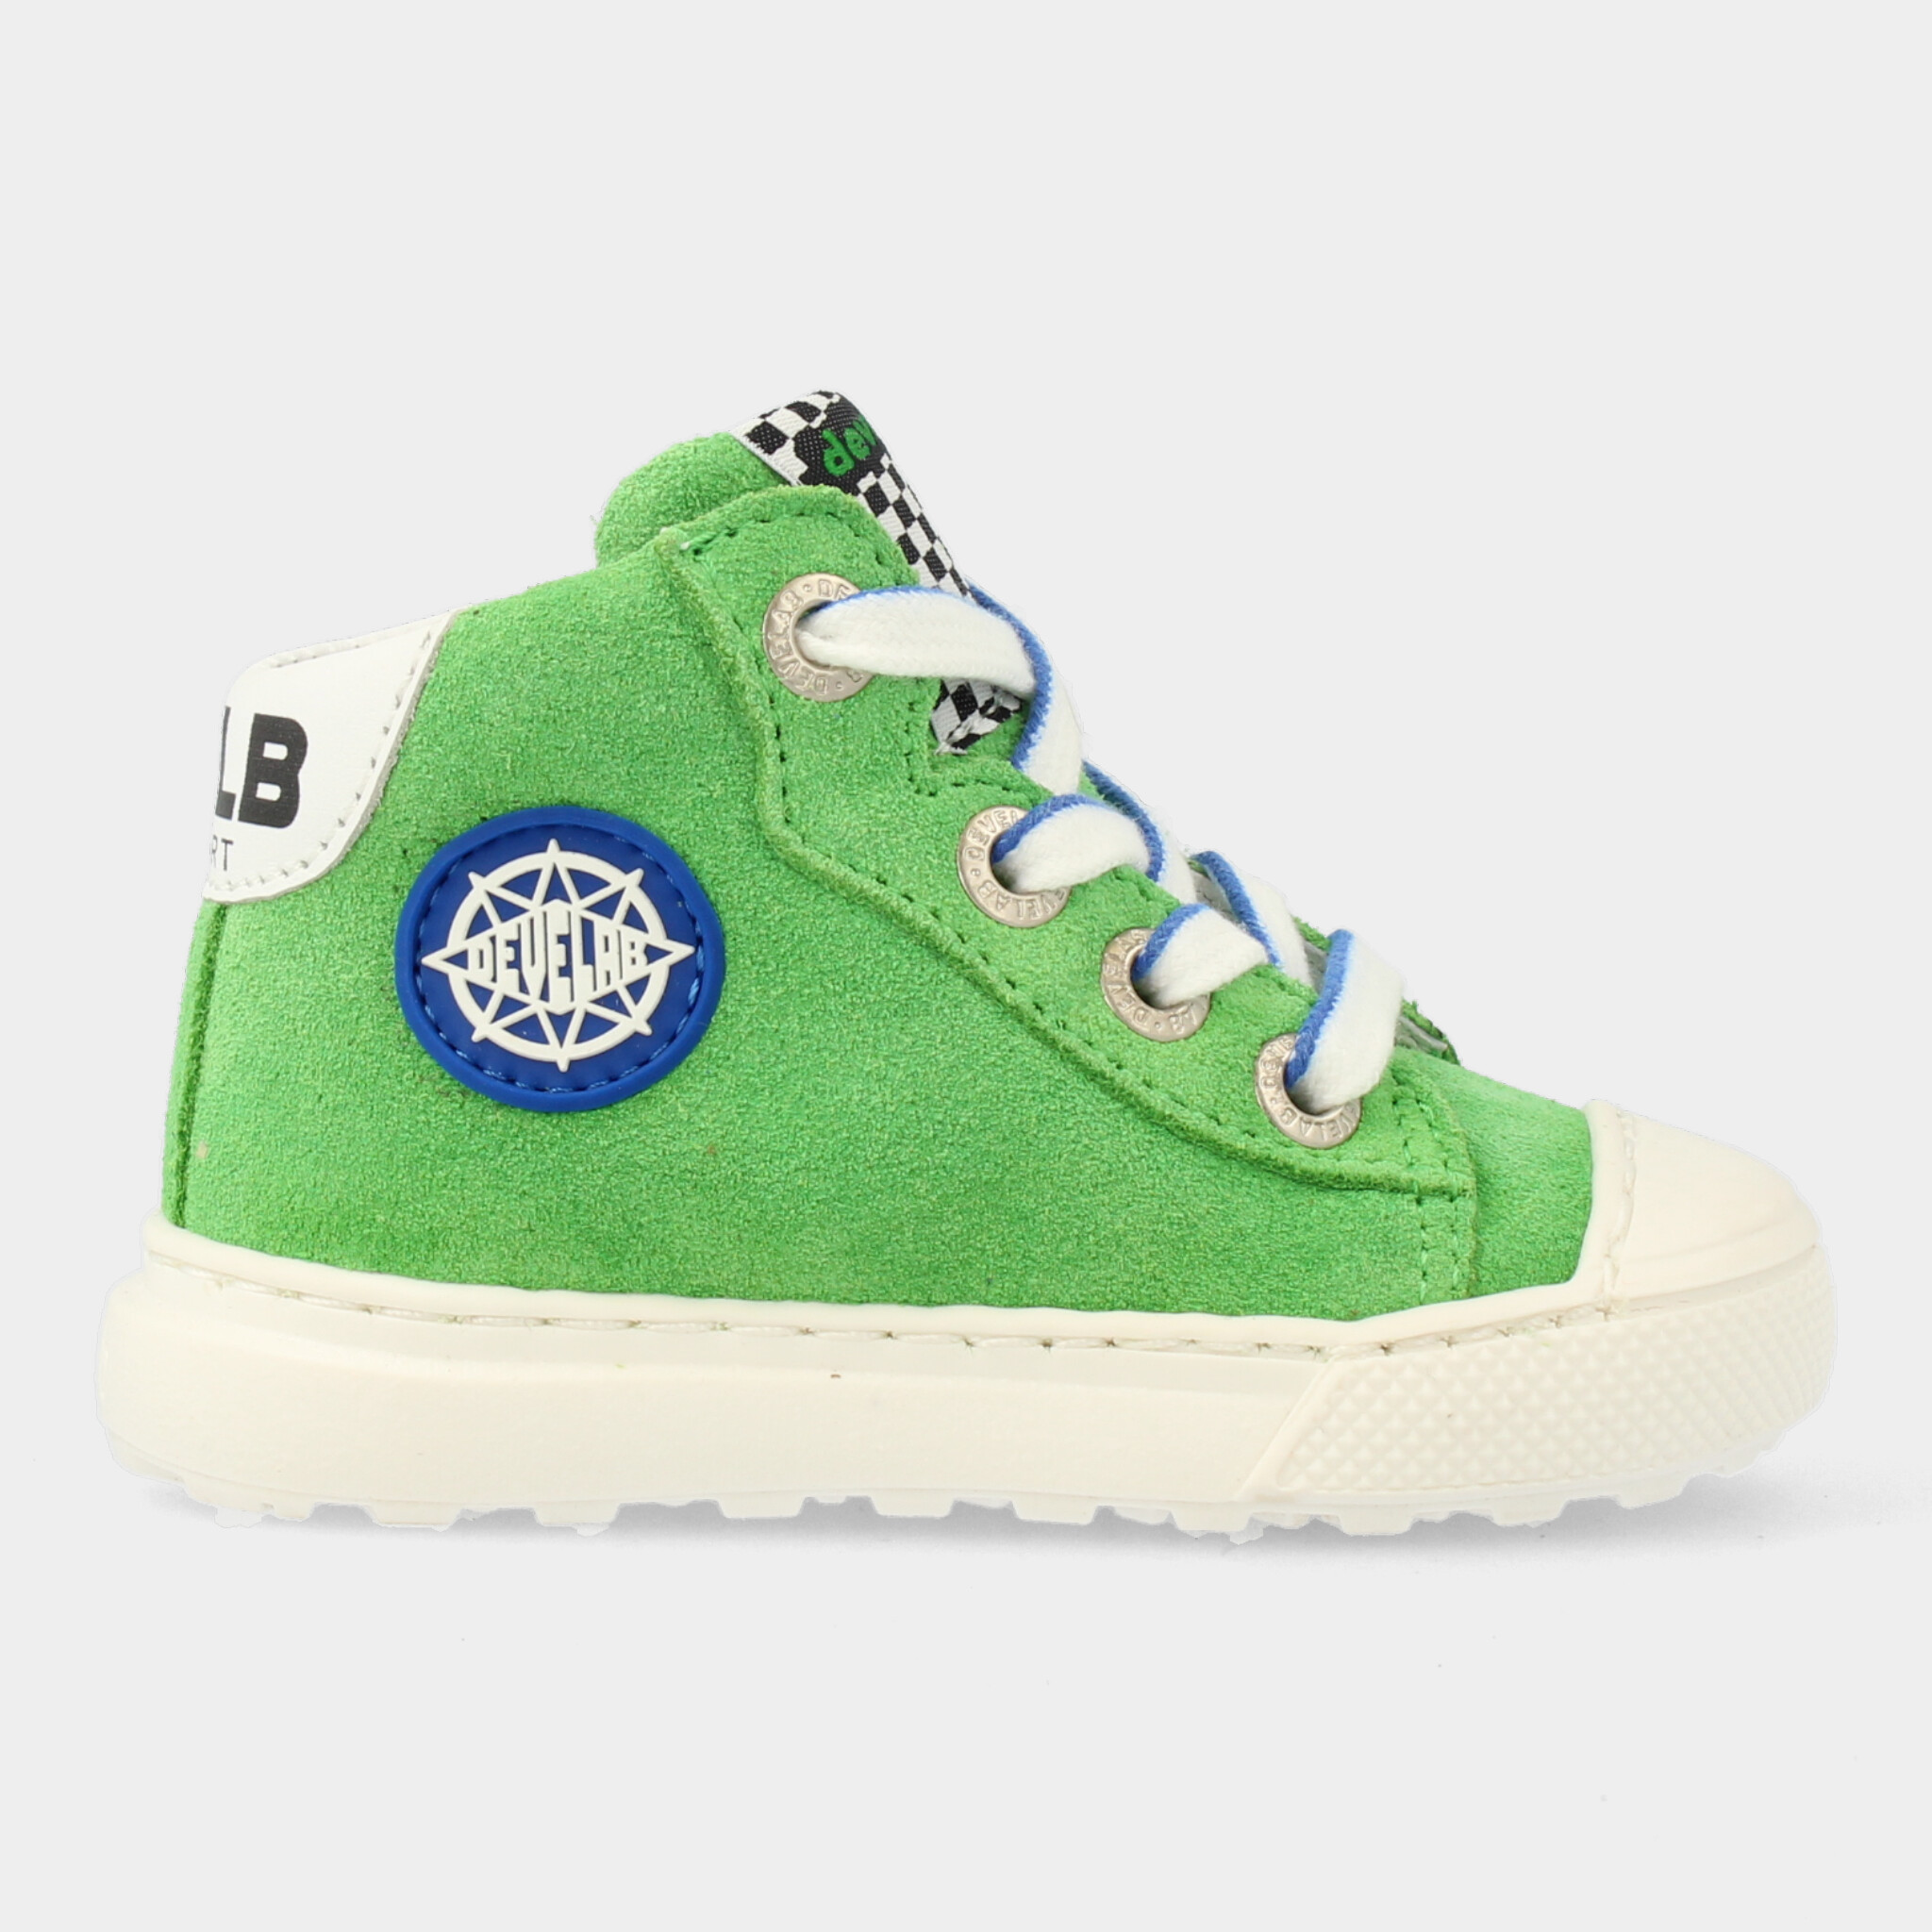 Hoge Groene Sneakers | Develab 45747